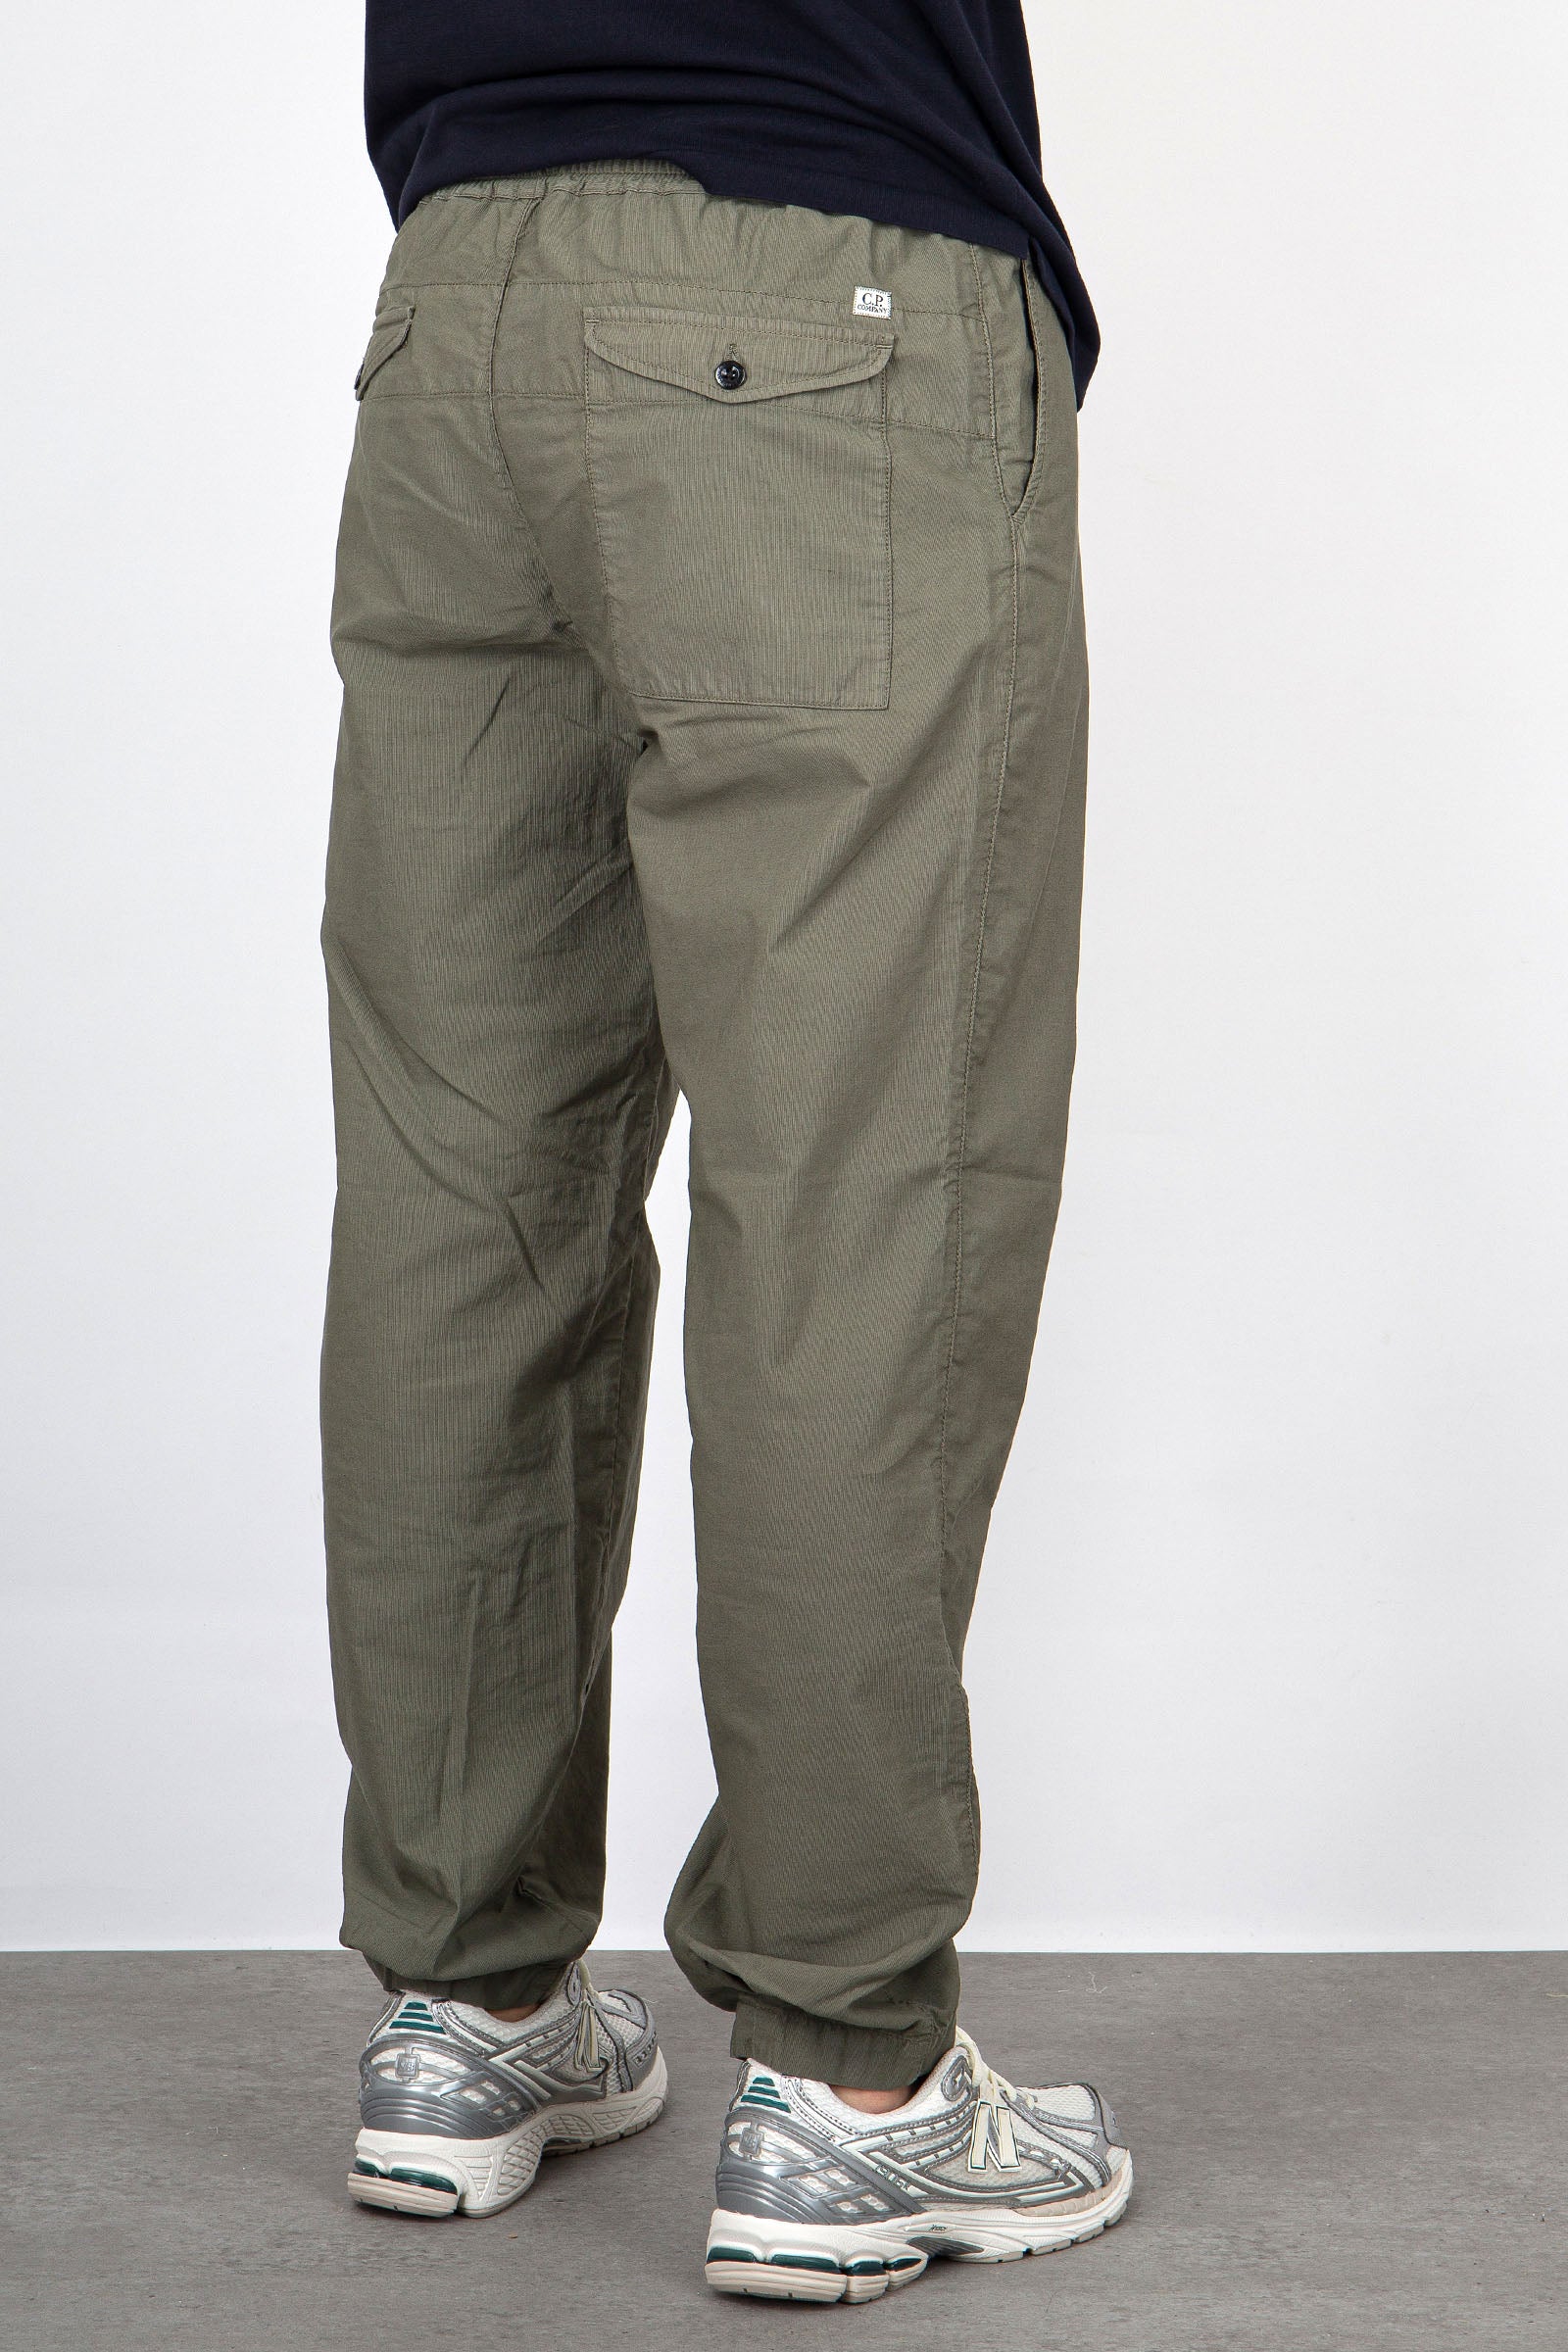 C.P. Company Green Military Cotton Cargo Pants - 3